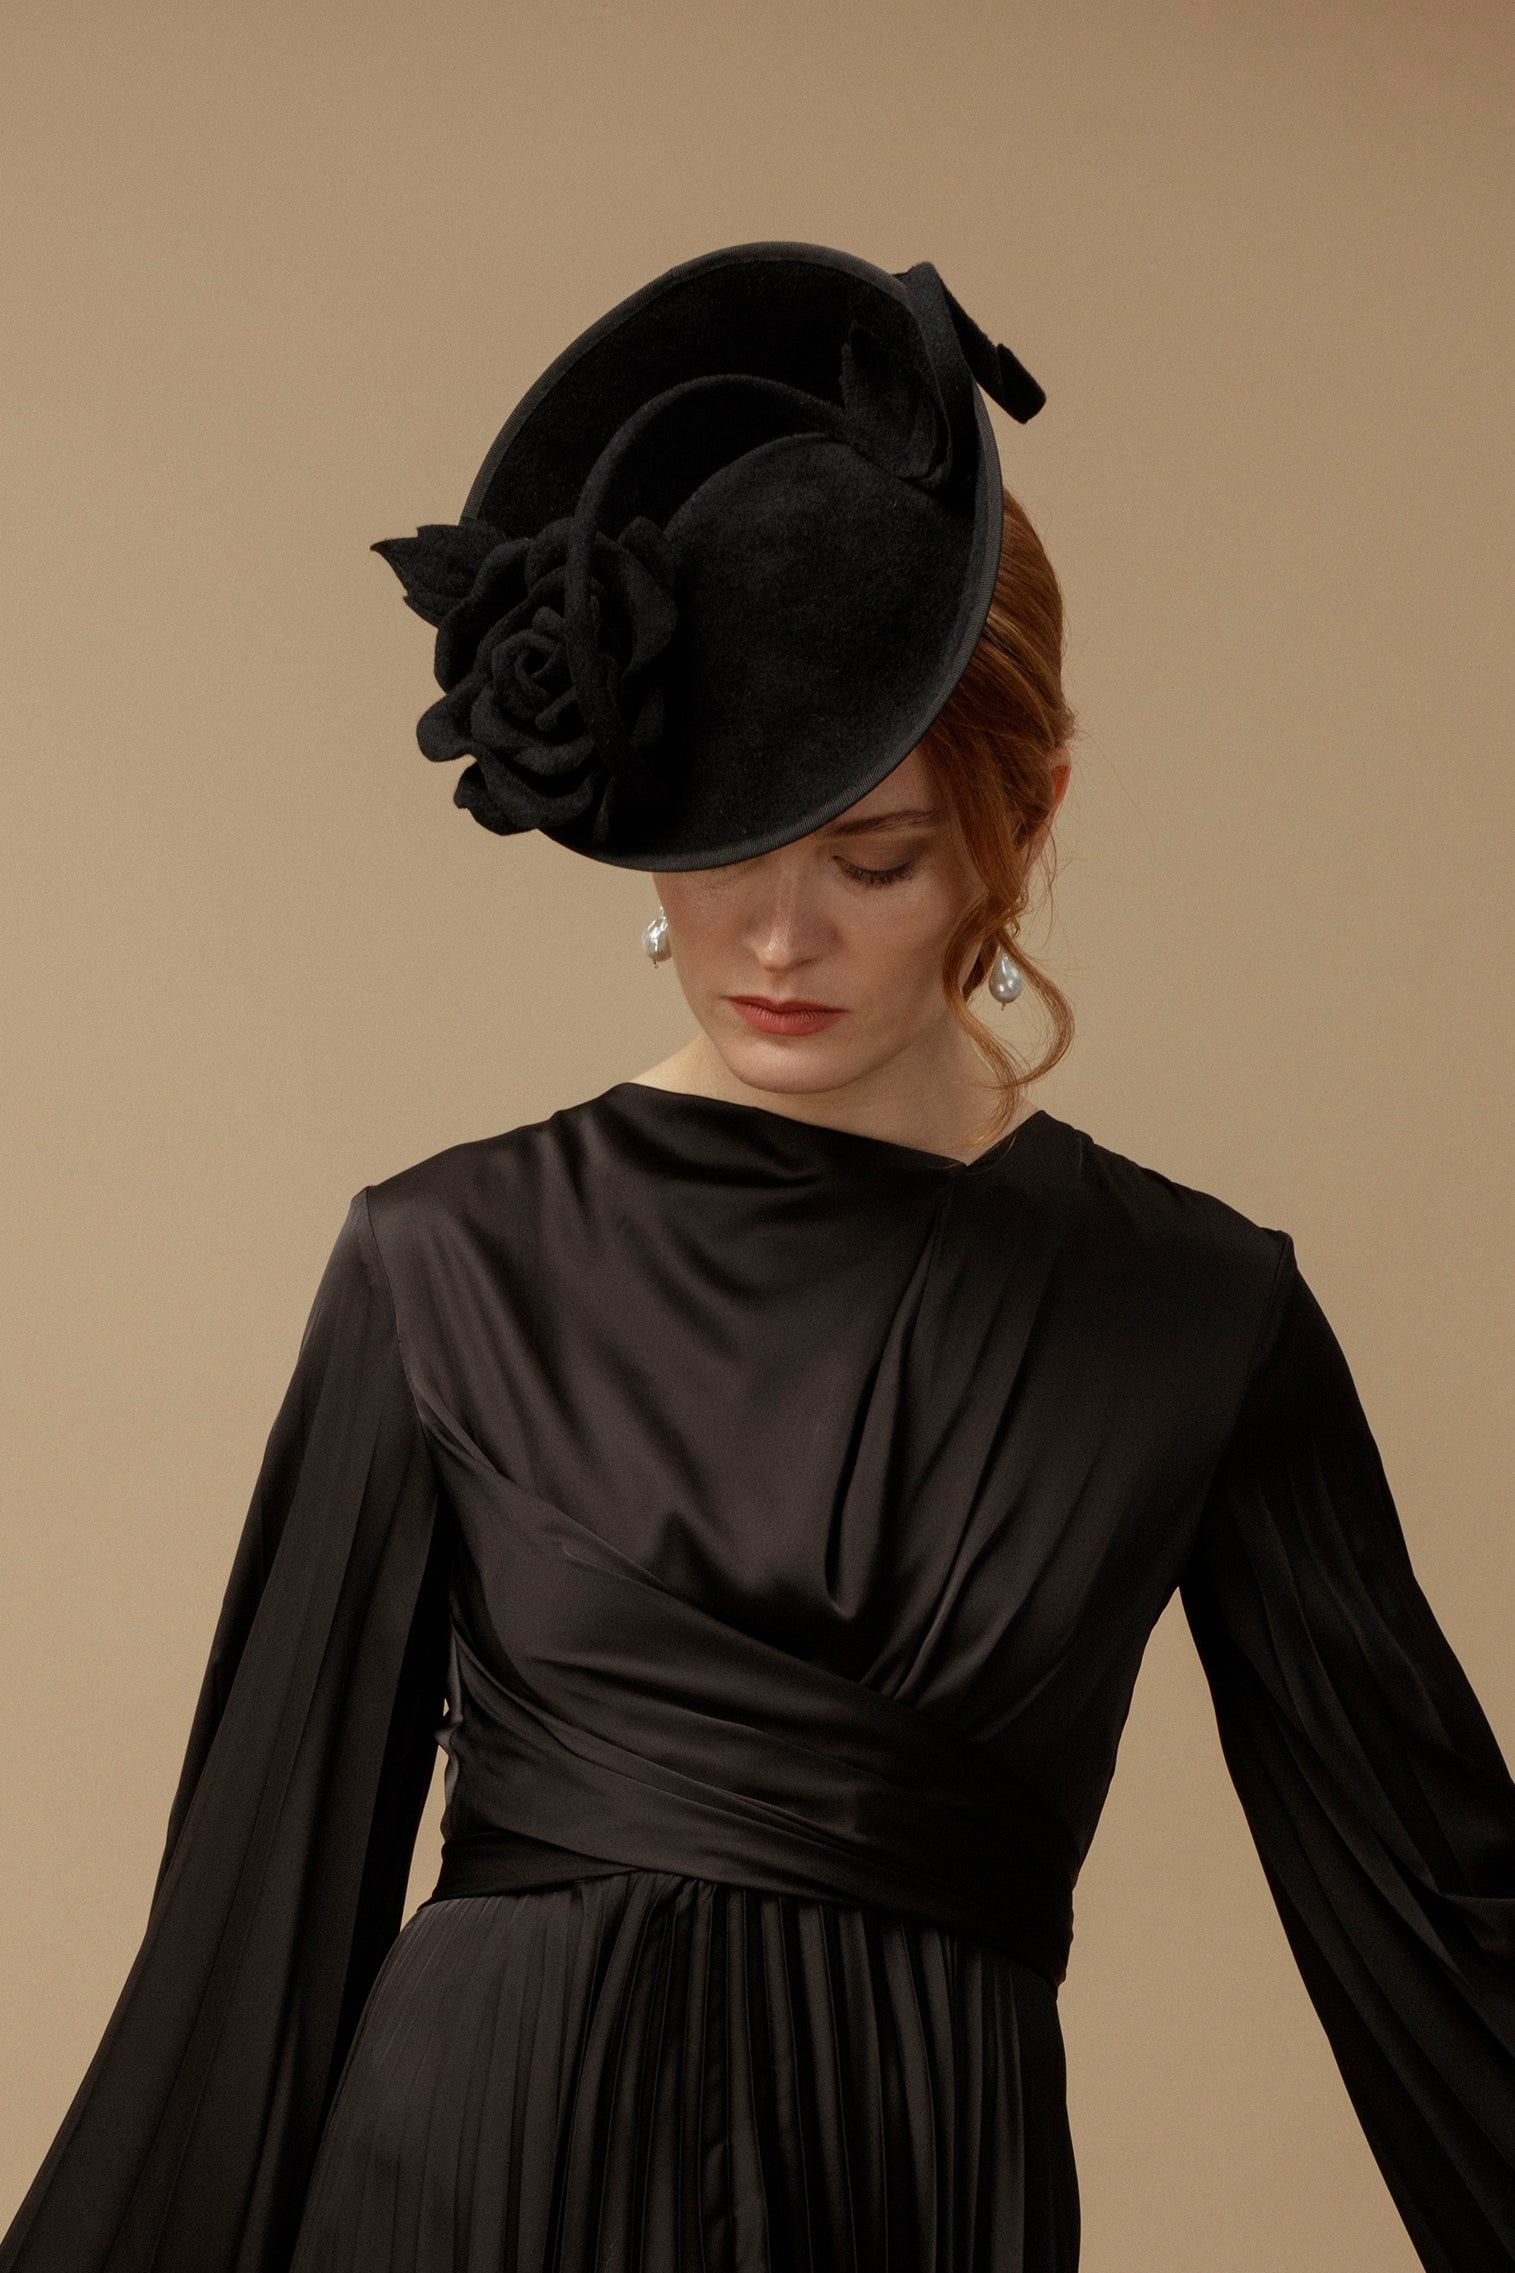 Black Belgravia Rose Hat - Products - Lock & Co. Hatters London UK